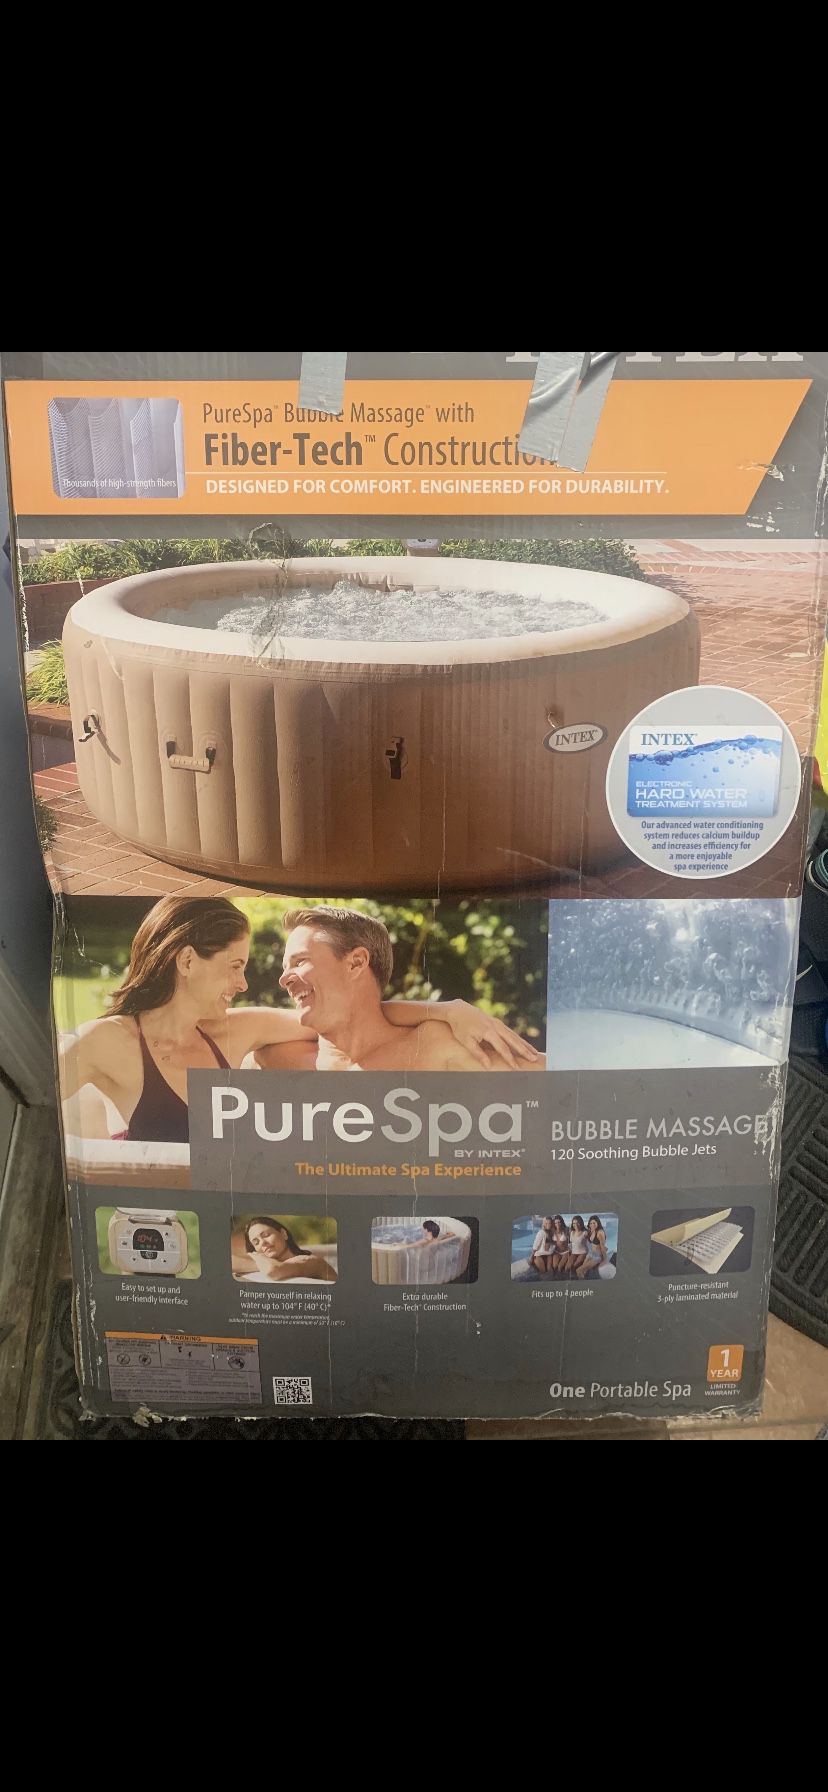 *PREMIUM MODEL* Intex 4-Person PureSpa Bubble Massage Inflatable Hot Tub Spa